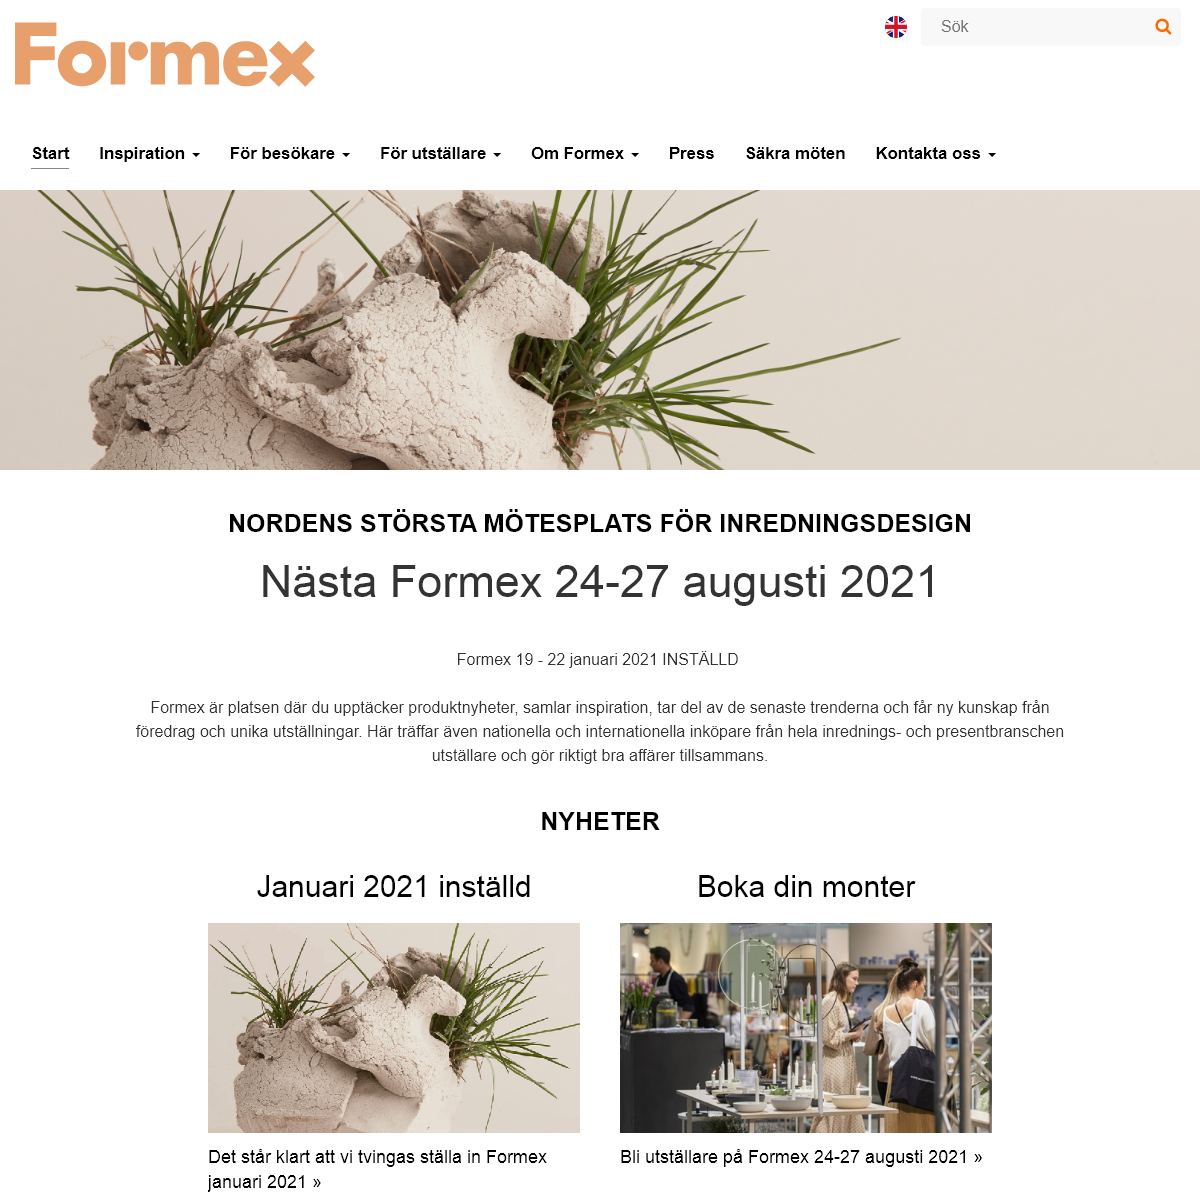 A complete backup of formex.se